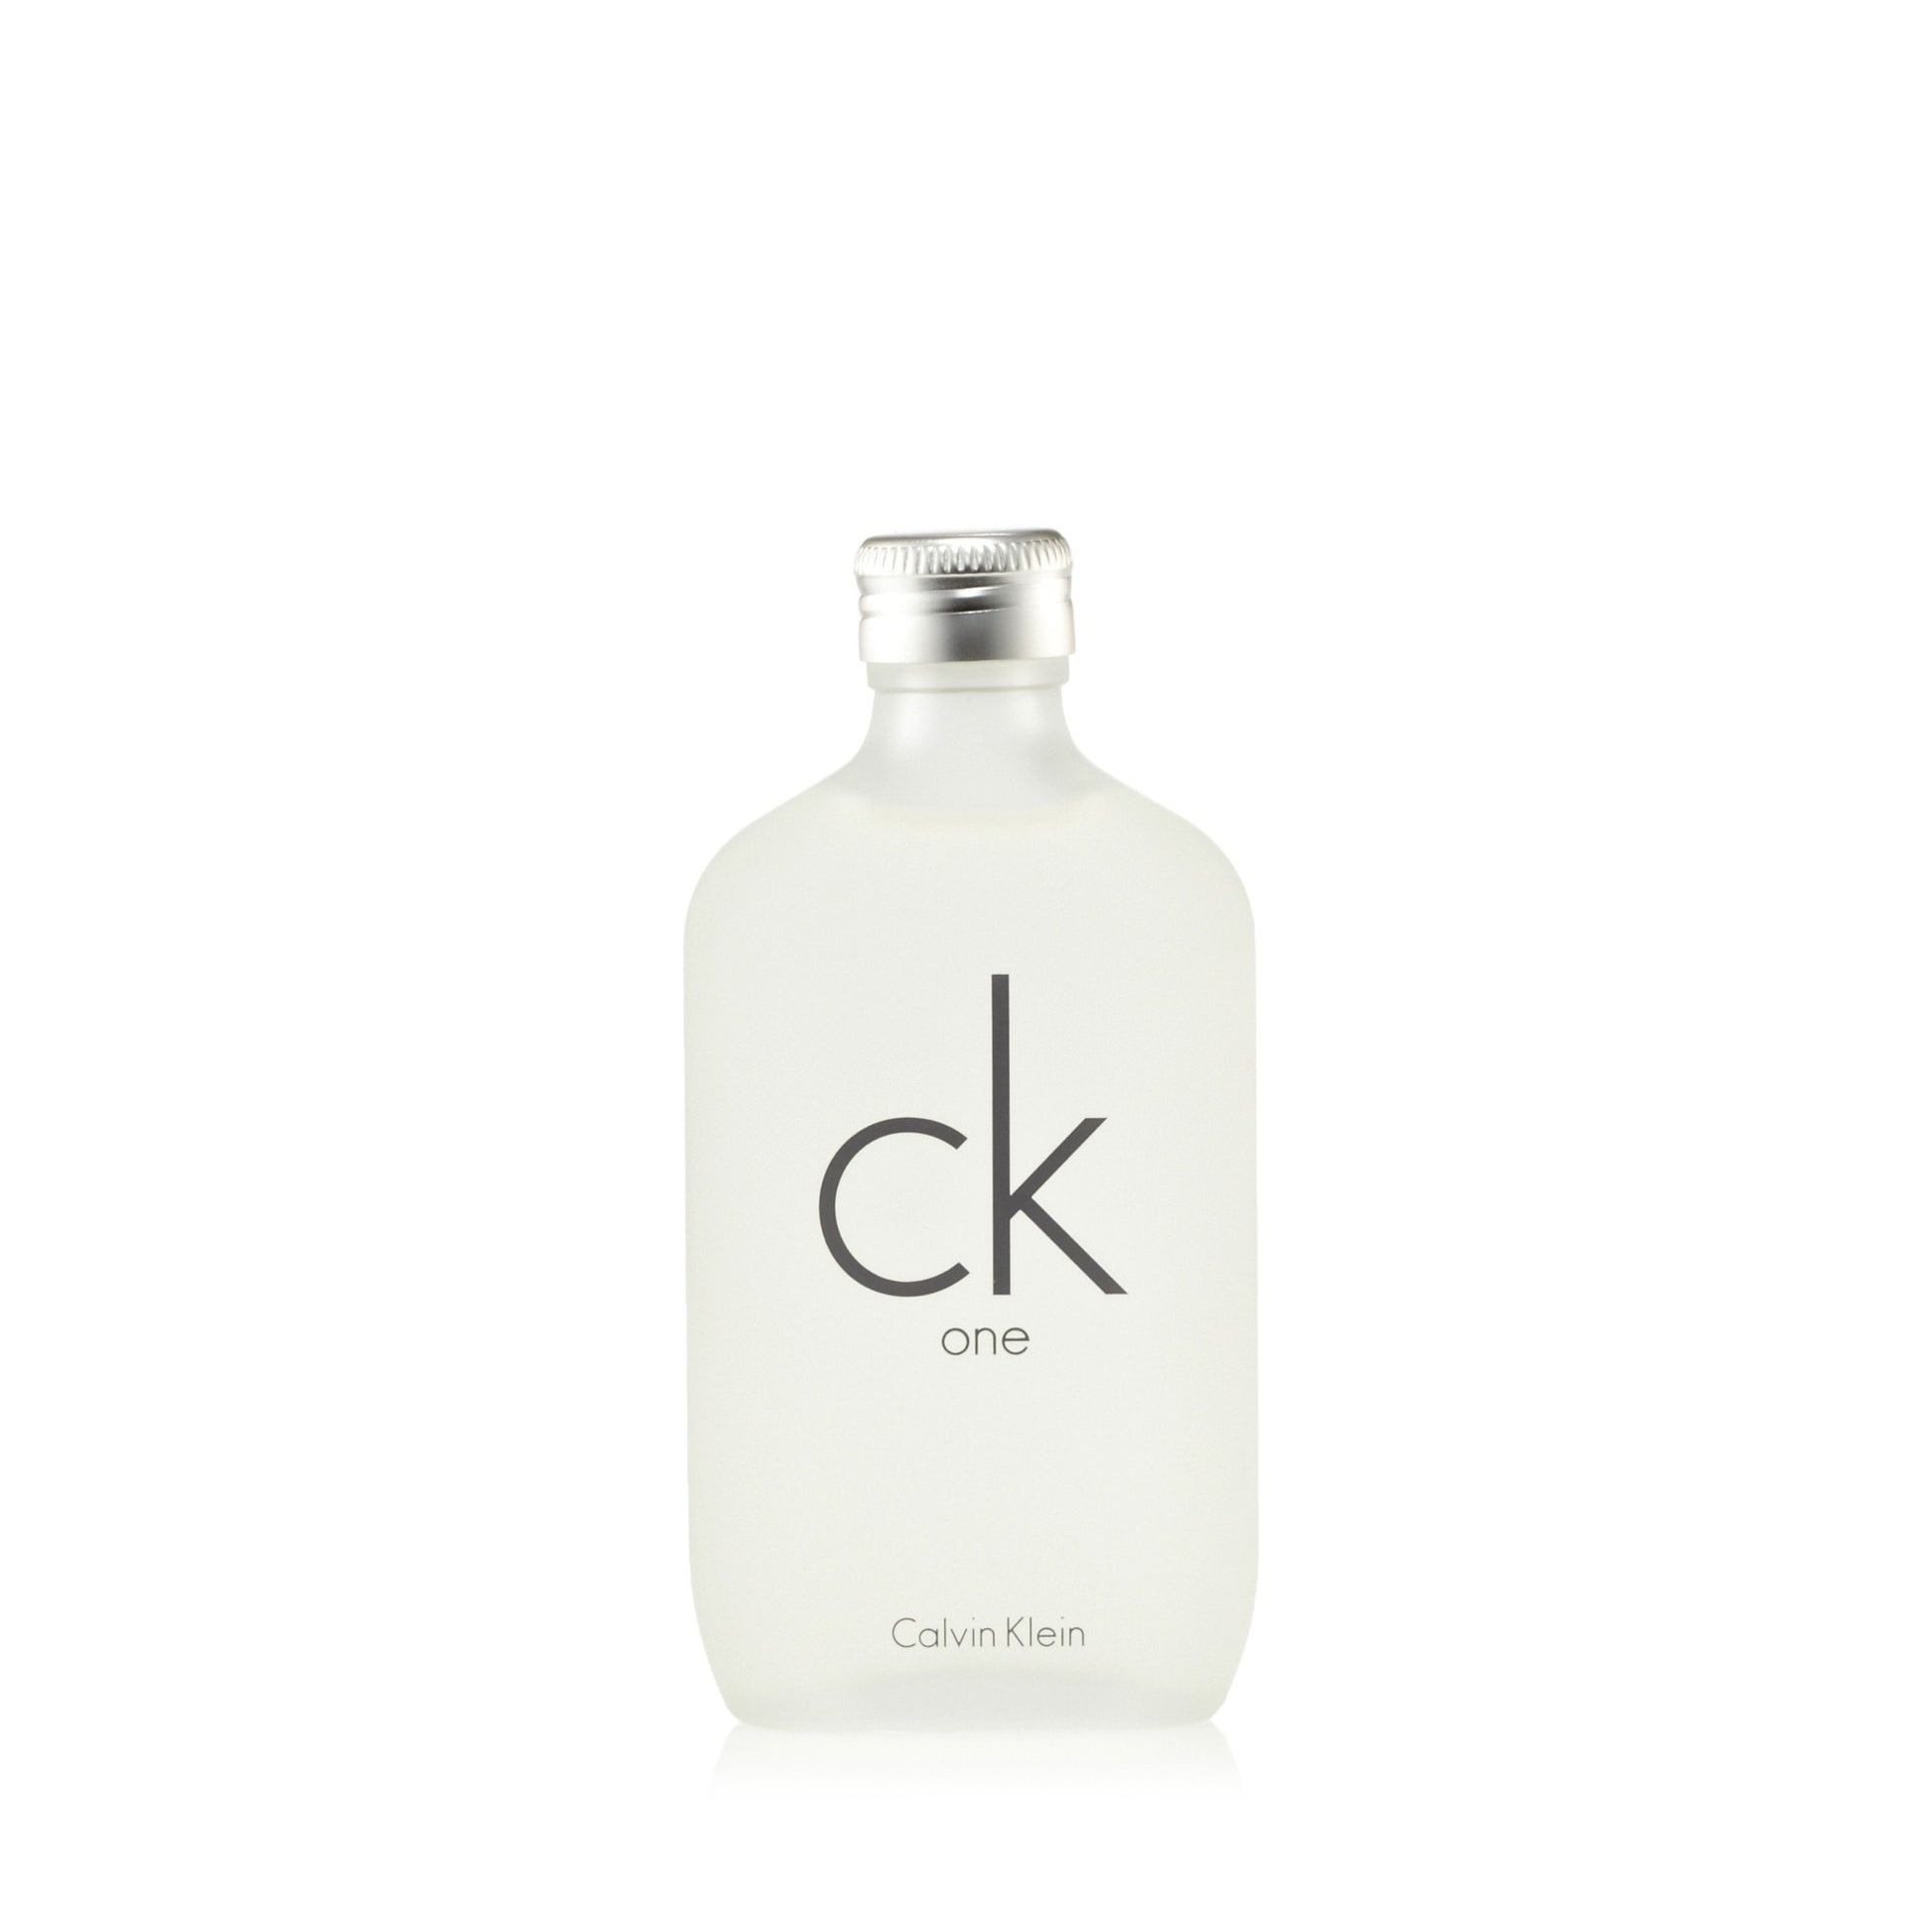 CK One Eau de Toilette Spray for Women and Men by Calvin Klein 3.4 oz. Click to open in modal